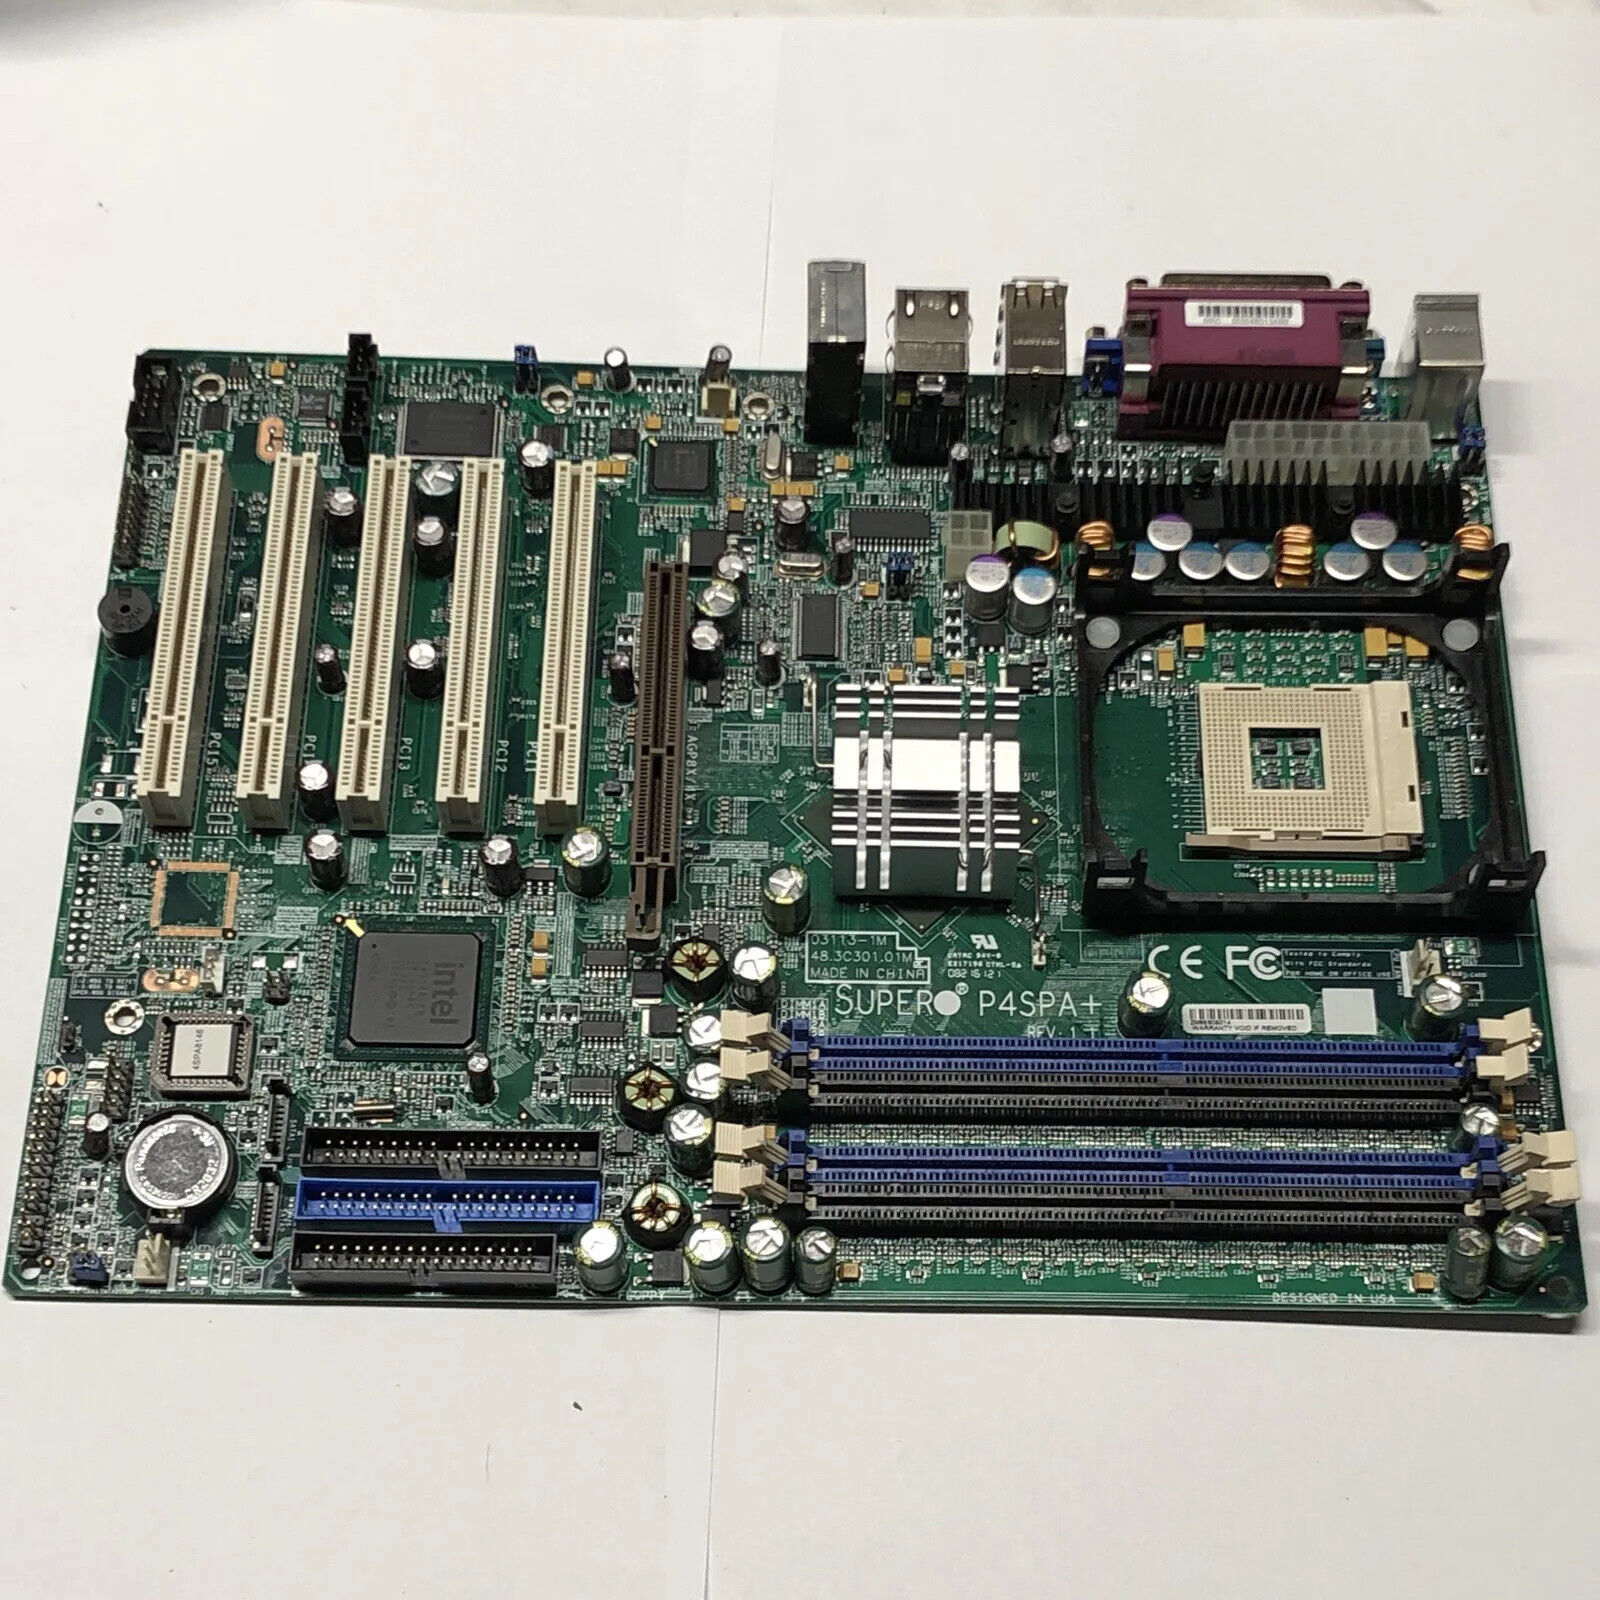 supermicro Atx motherboard intel P4spa+ Rev 1.1 New